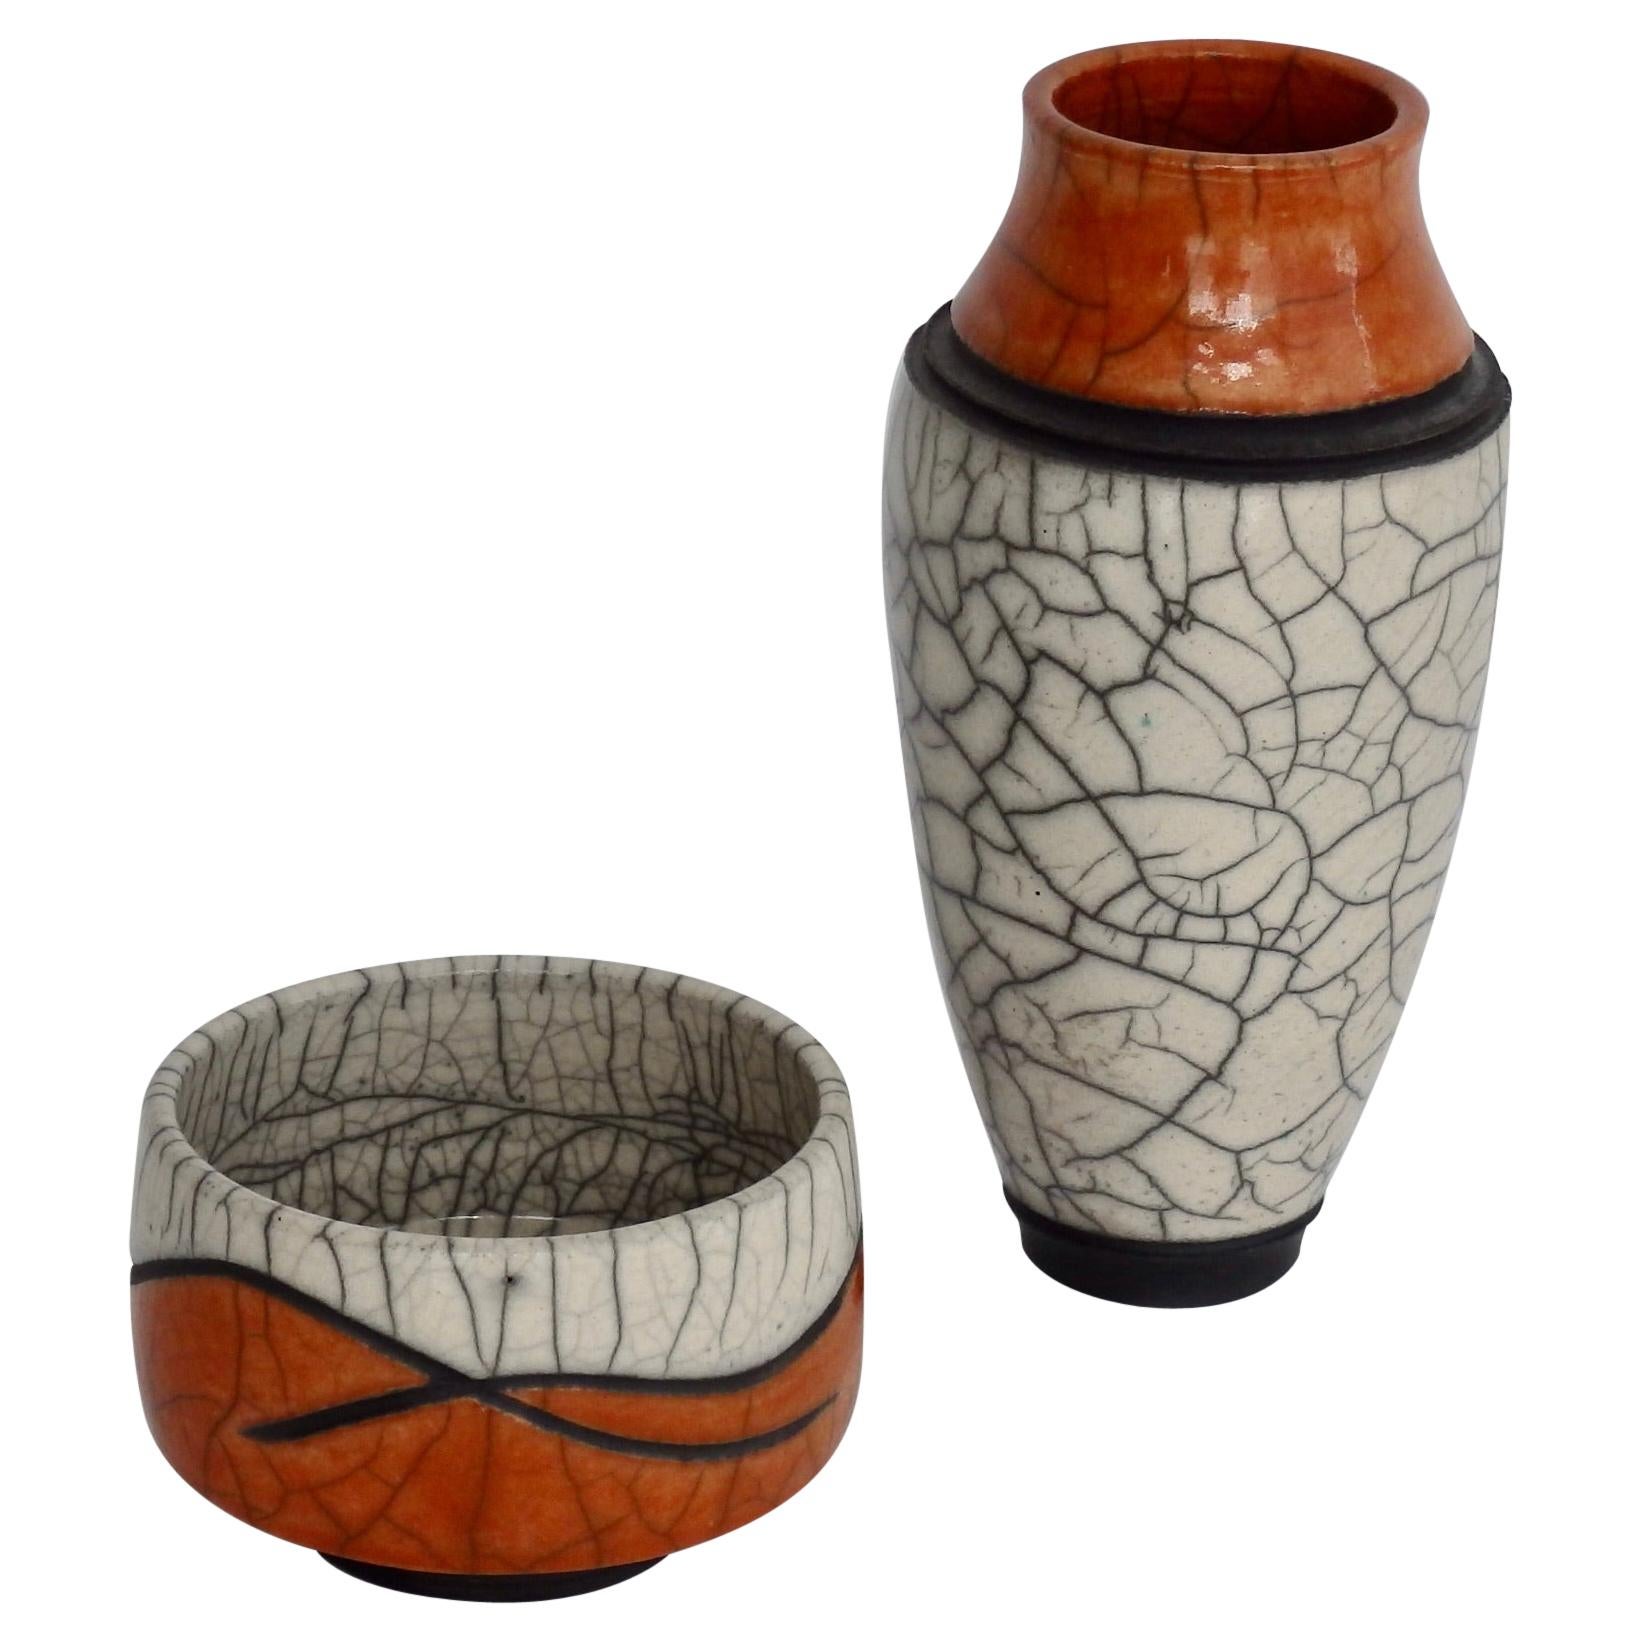 Pair of Jeff Hale Studio Crackle Glaze Raku Stoneware Vessels